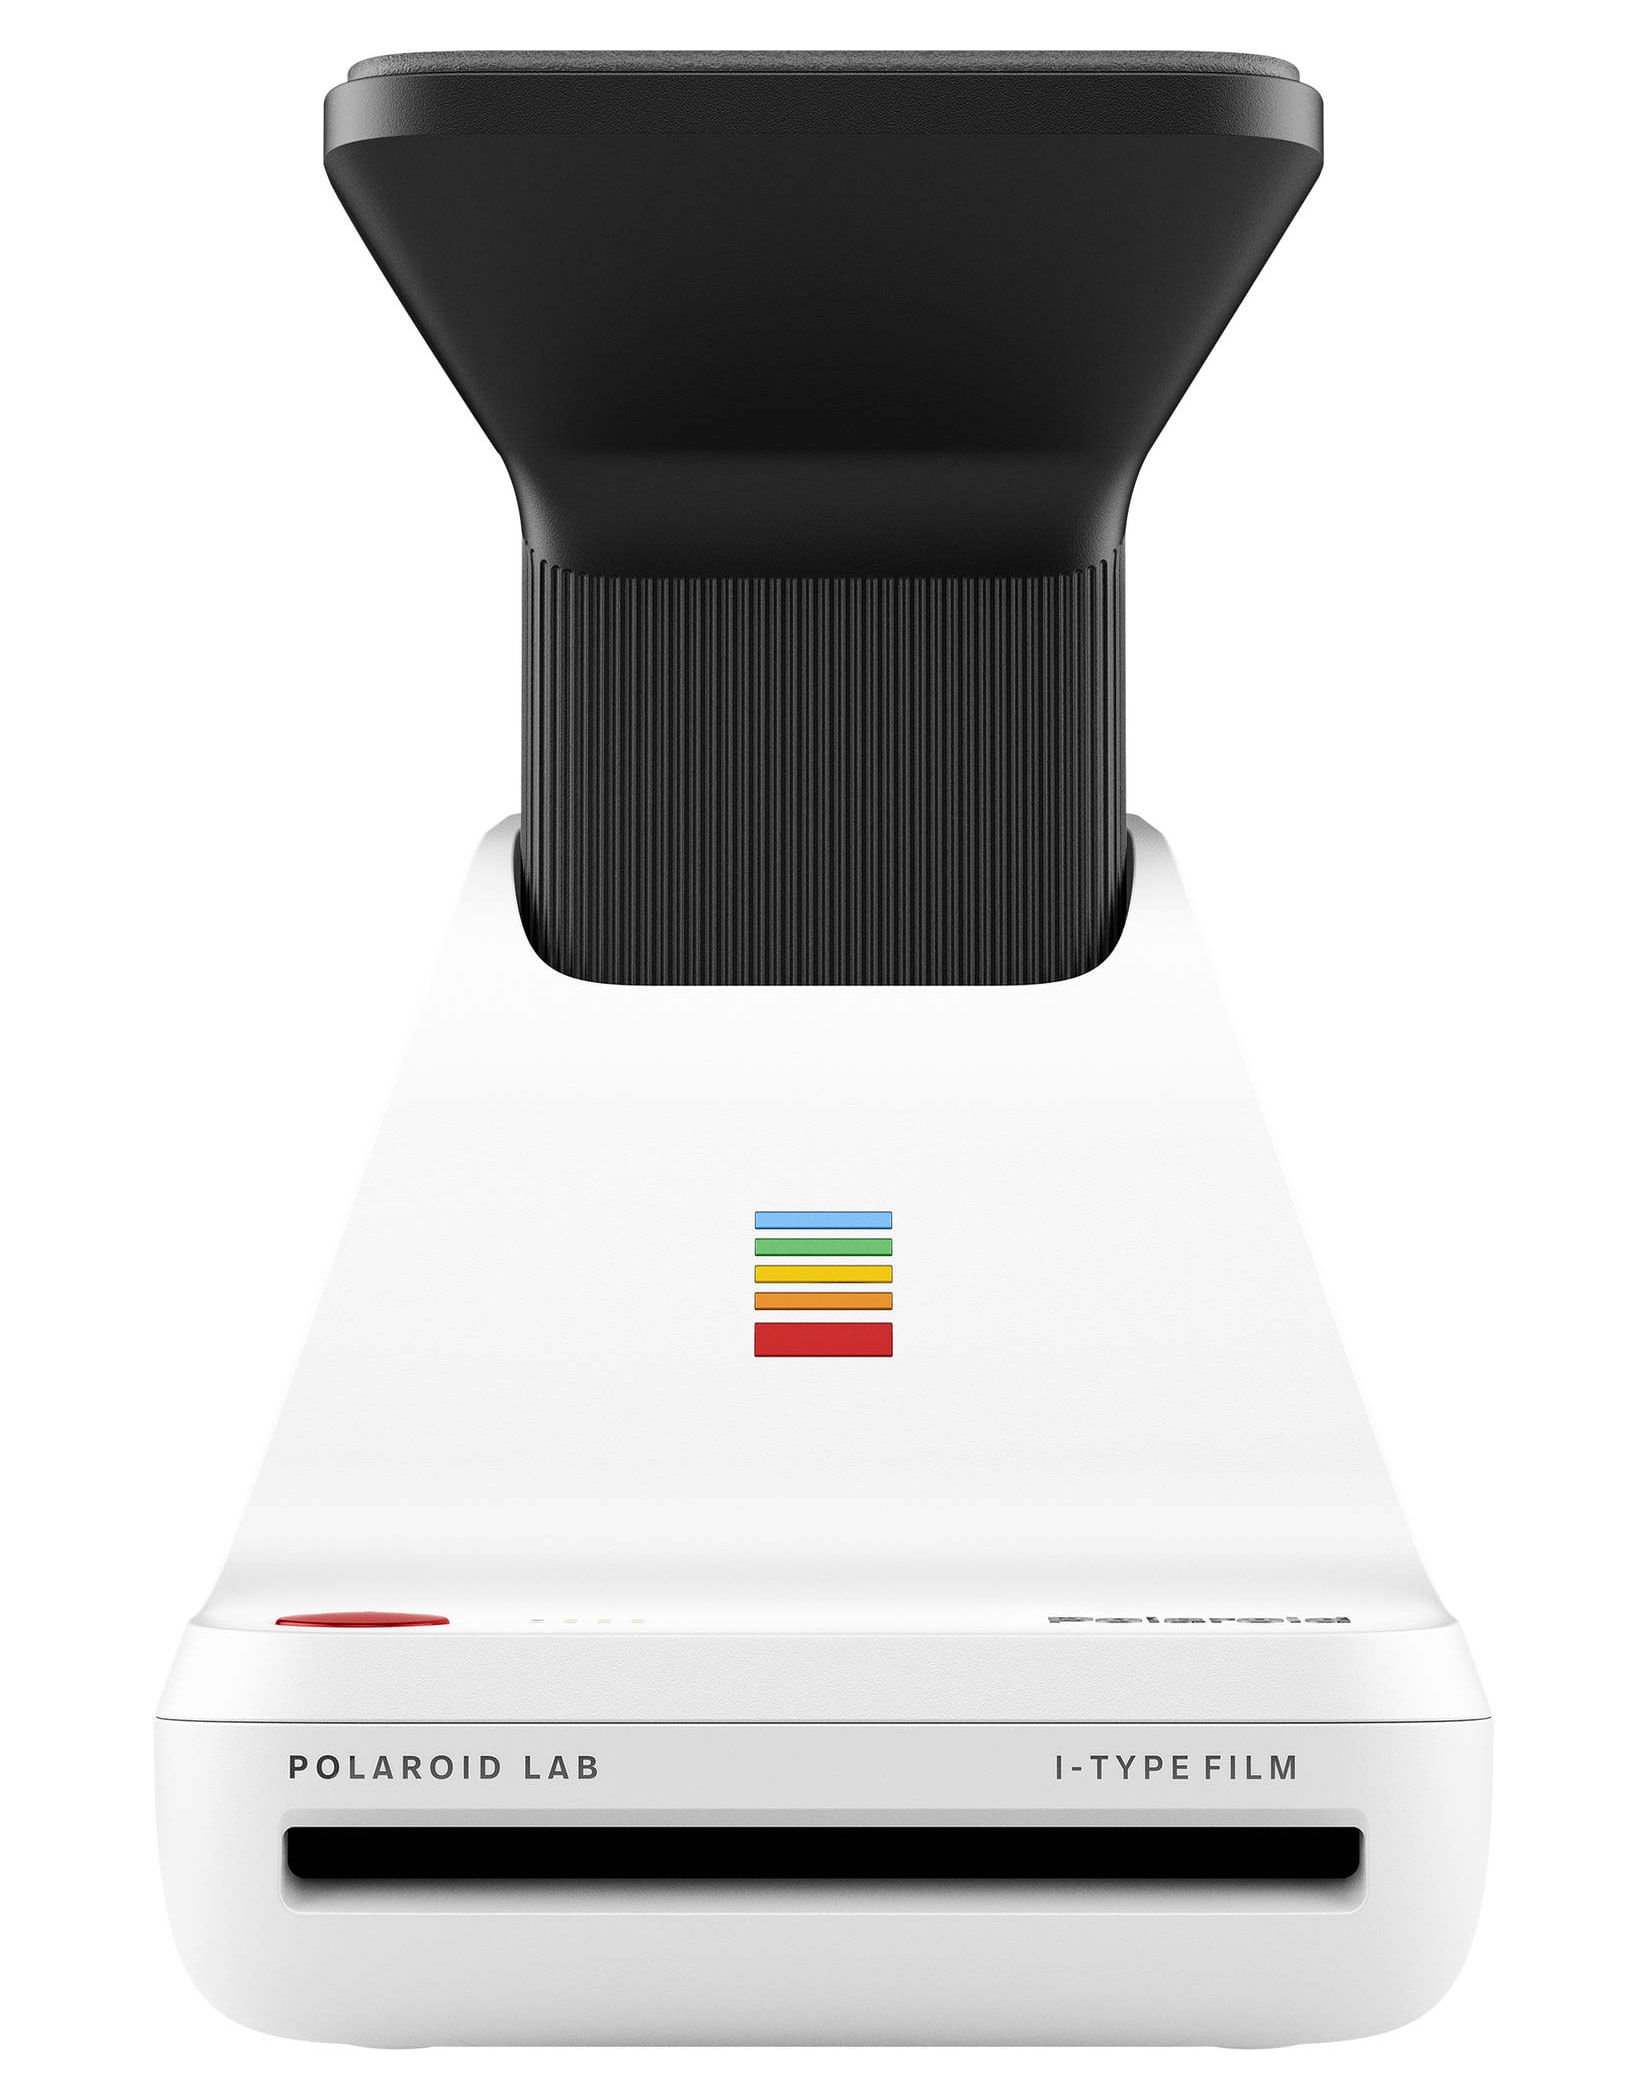 Impressora de Fotos de Smartphone Polaroid Lab - 7